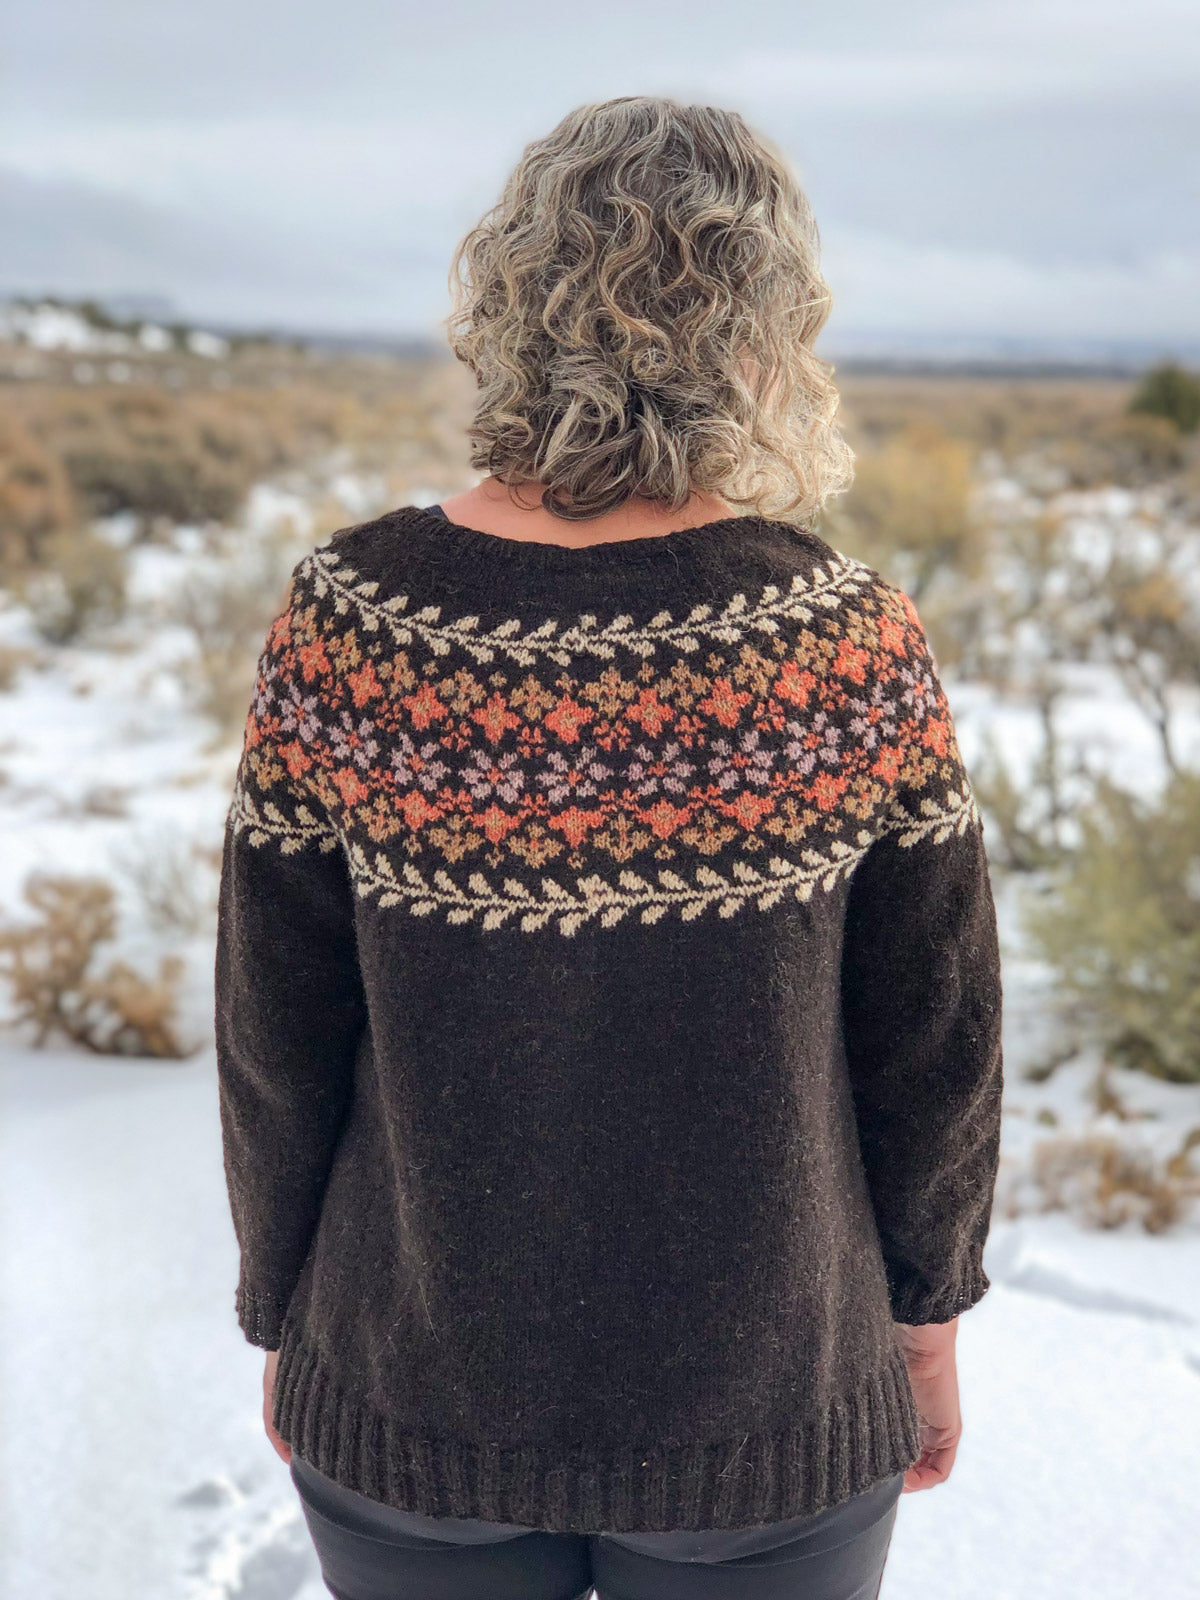 Back view of the yoked colorwork Birkin Sweater